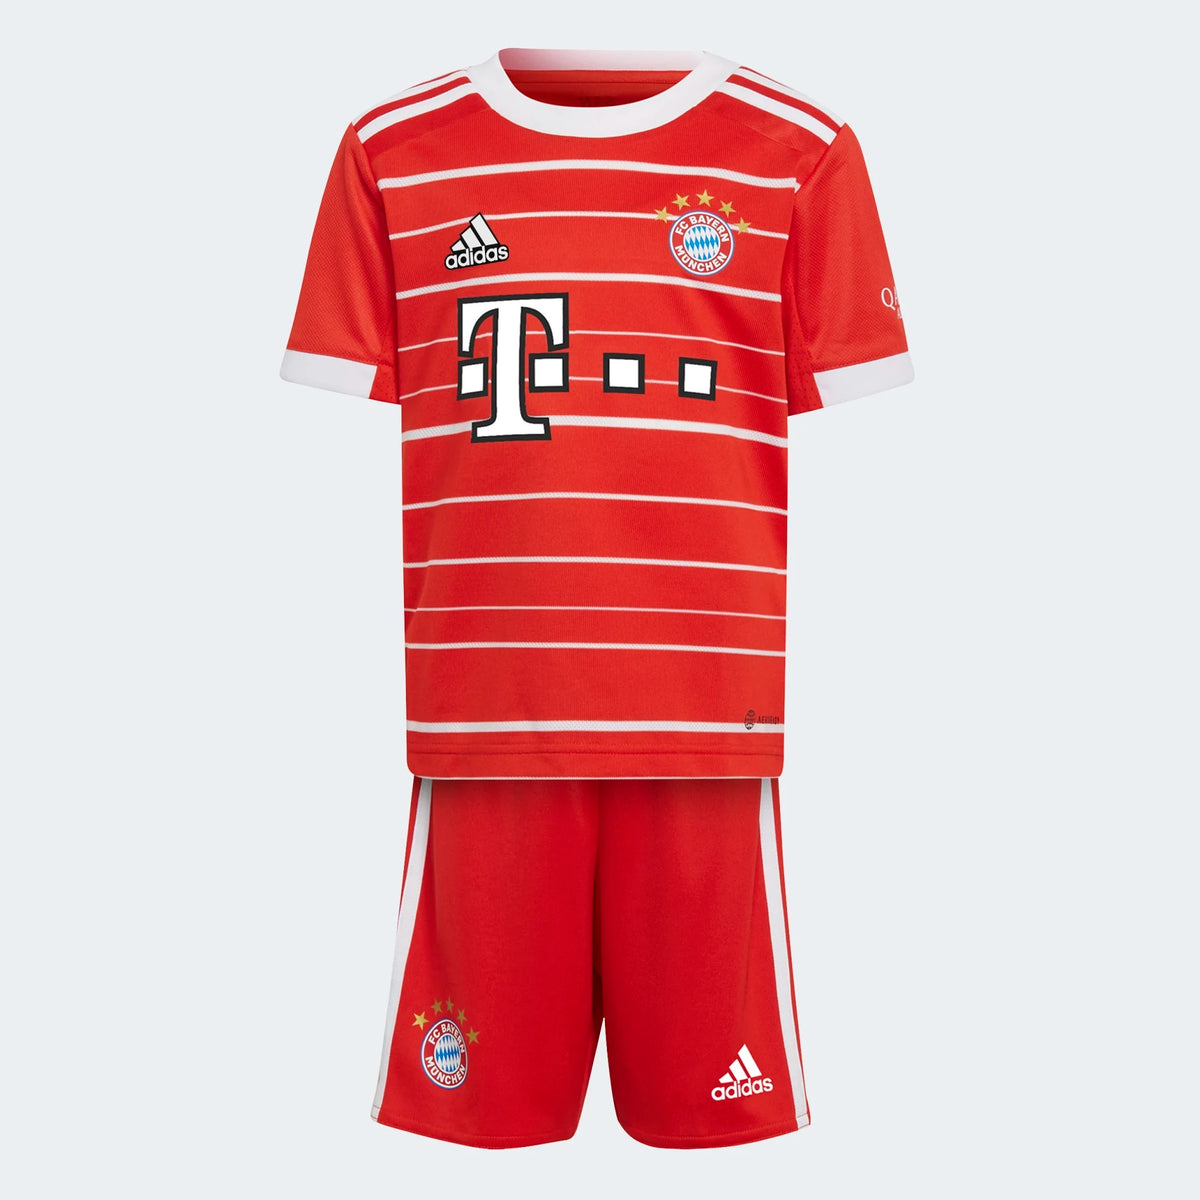 Men's Adidas Black Bayern Munich Authentic Football Icon Goalkeeper Jersey